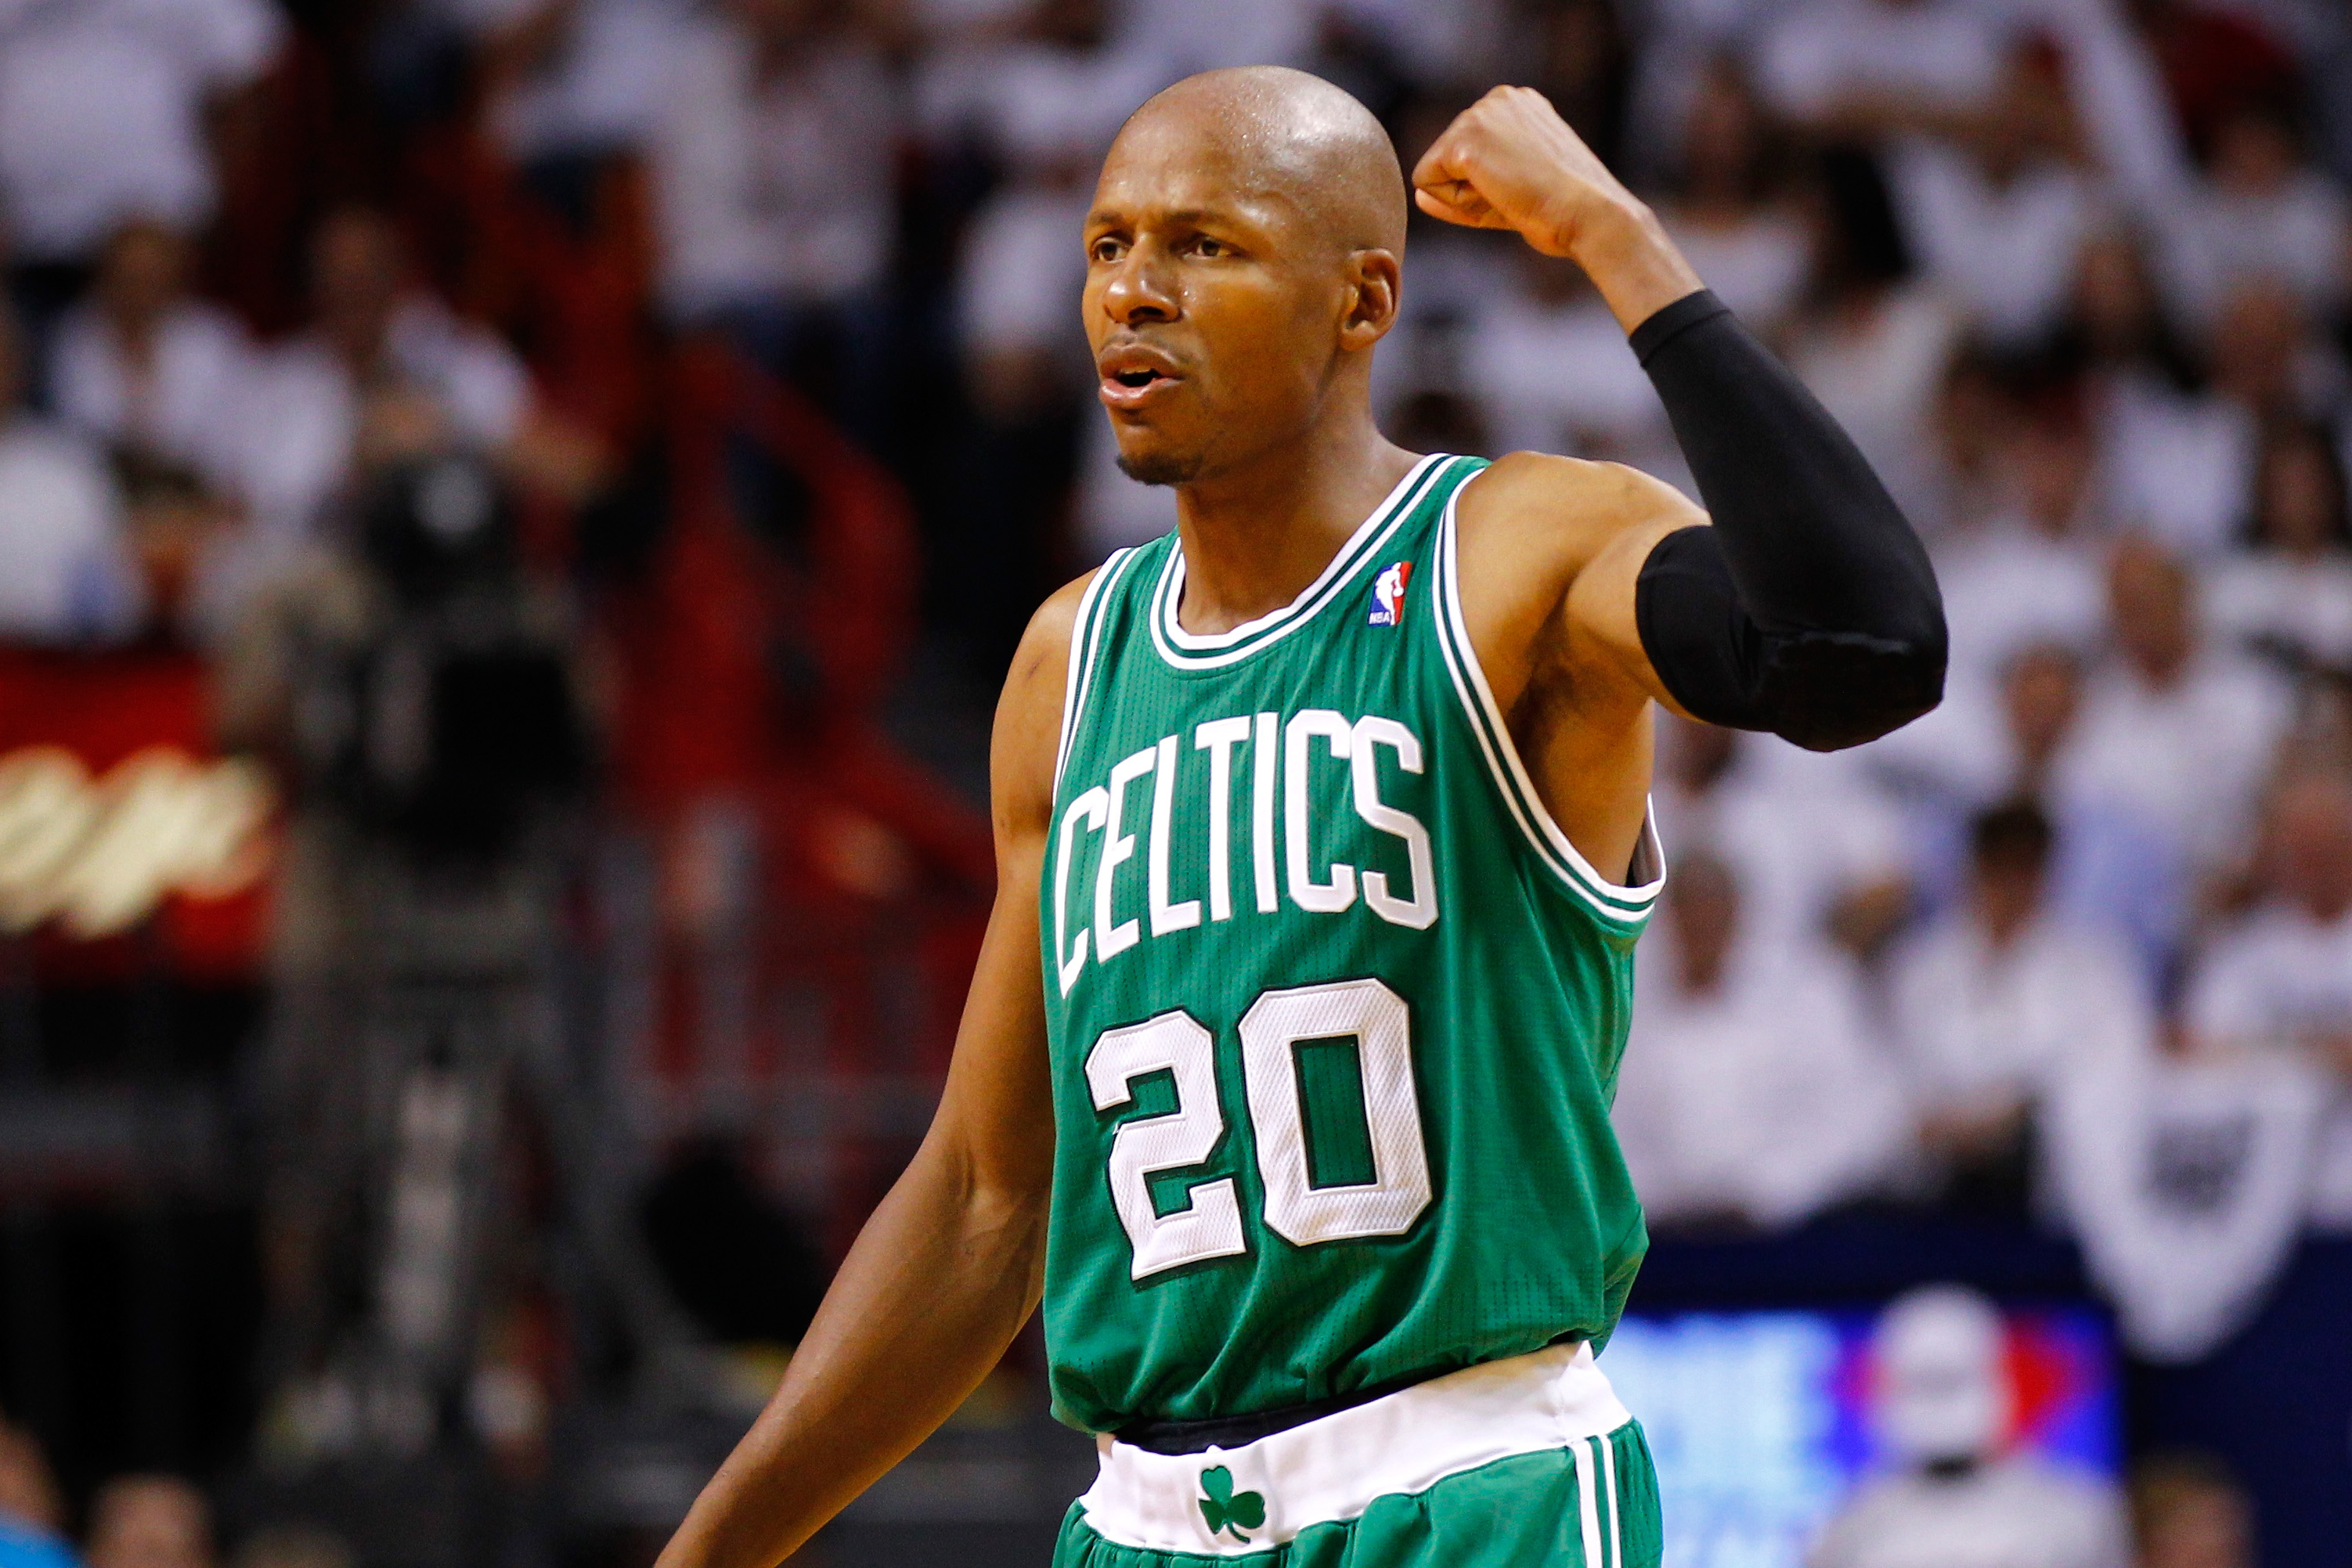 Kevin Garnett has No. 5 jersey retired by Celtics, buries hatchet